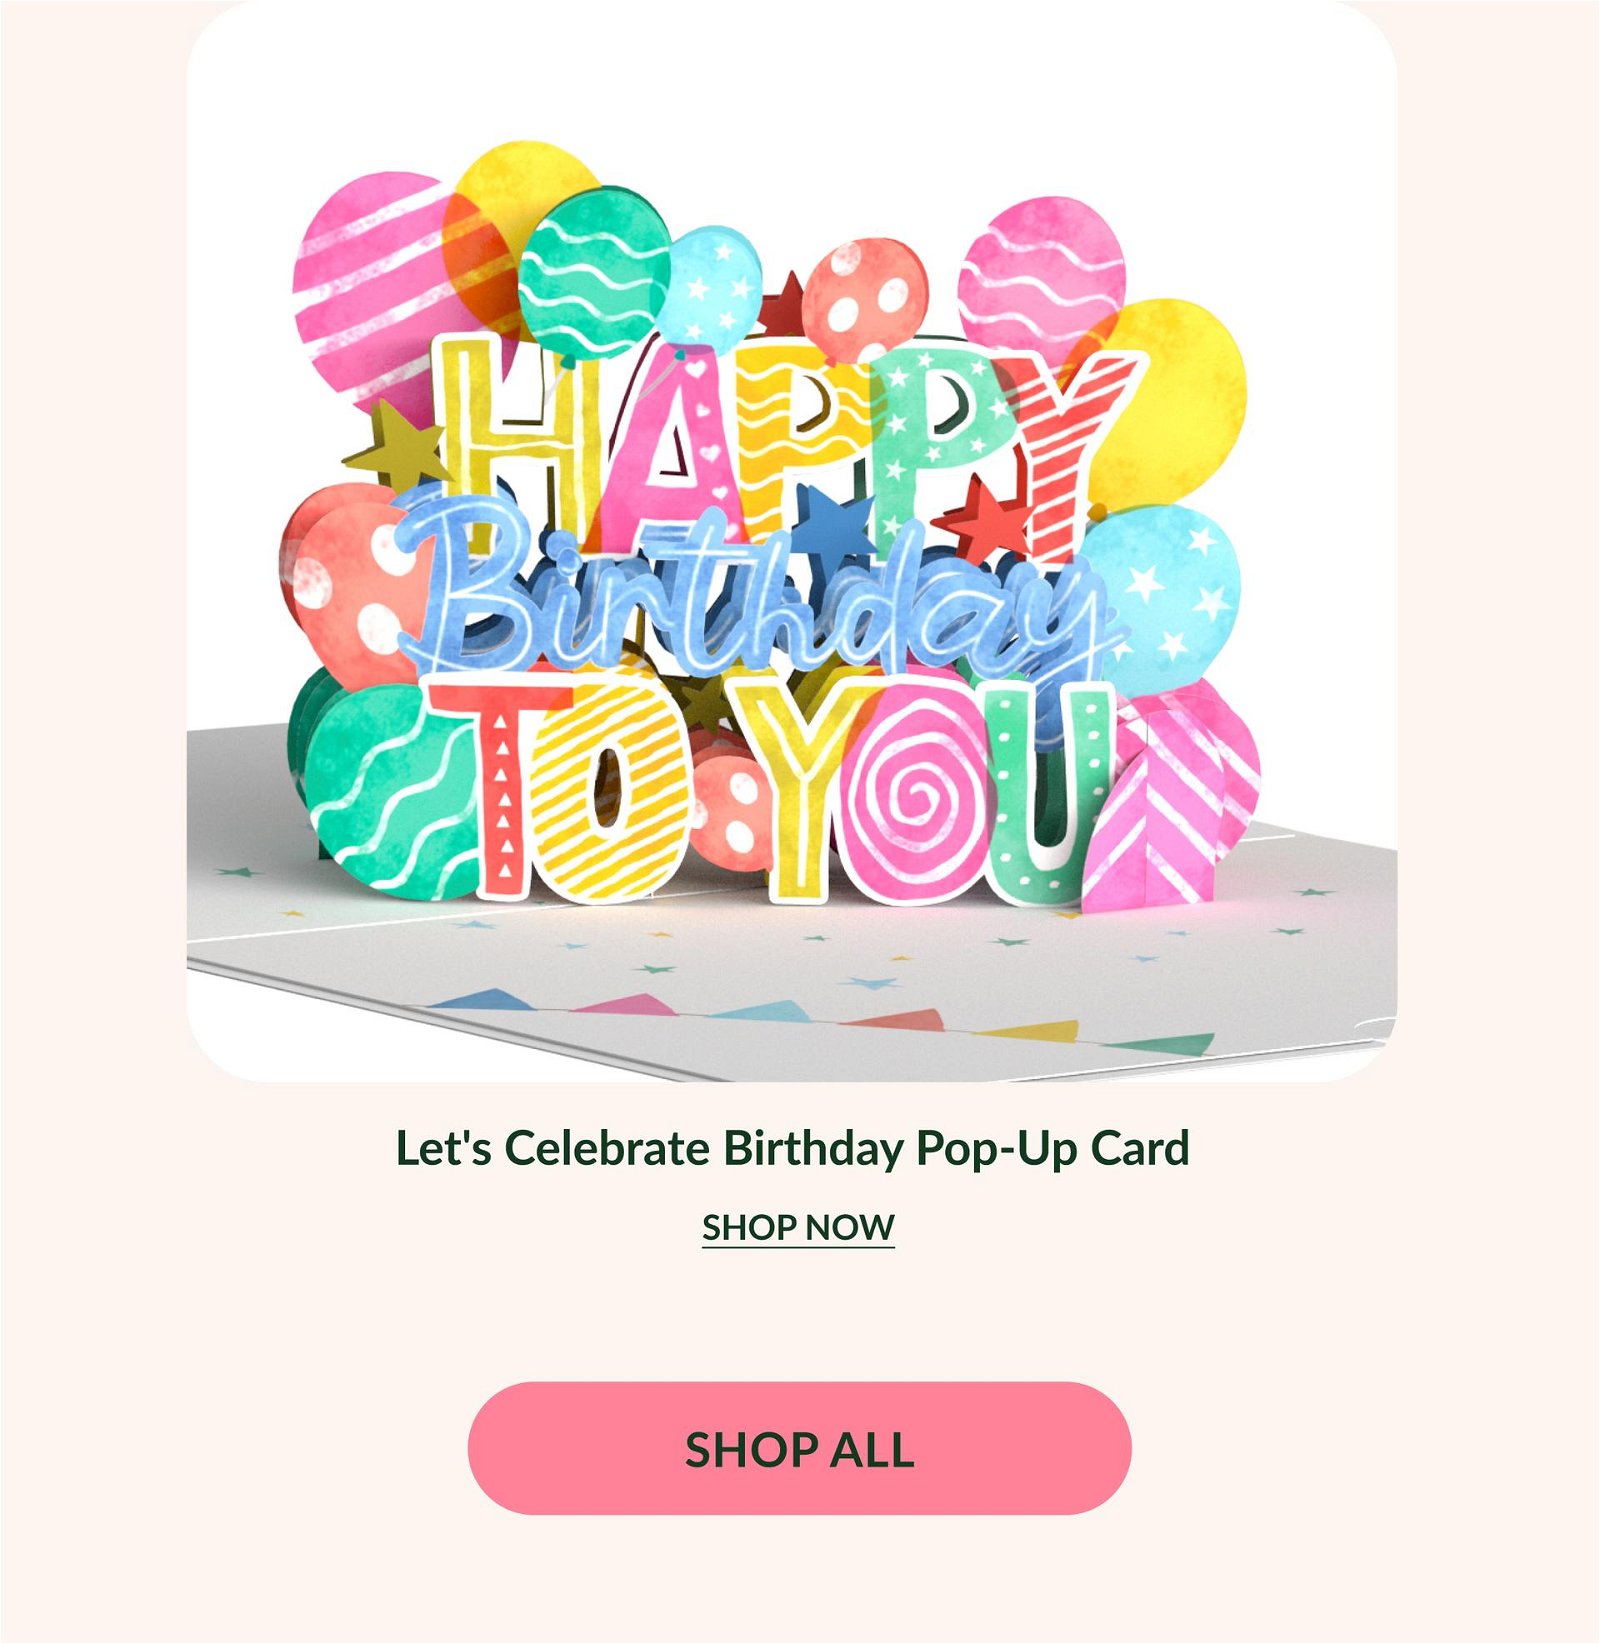 Let's Celebrate Birthday Pop-Up Card